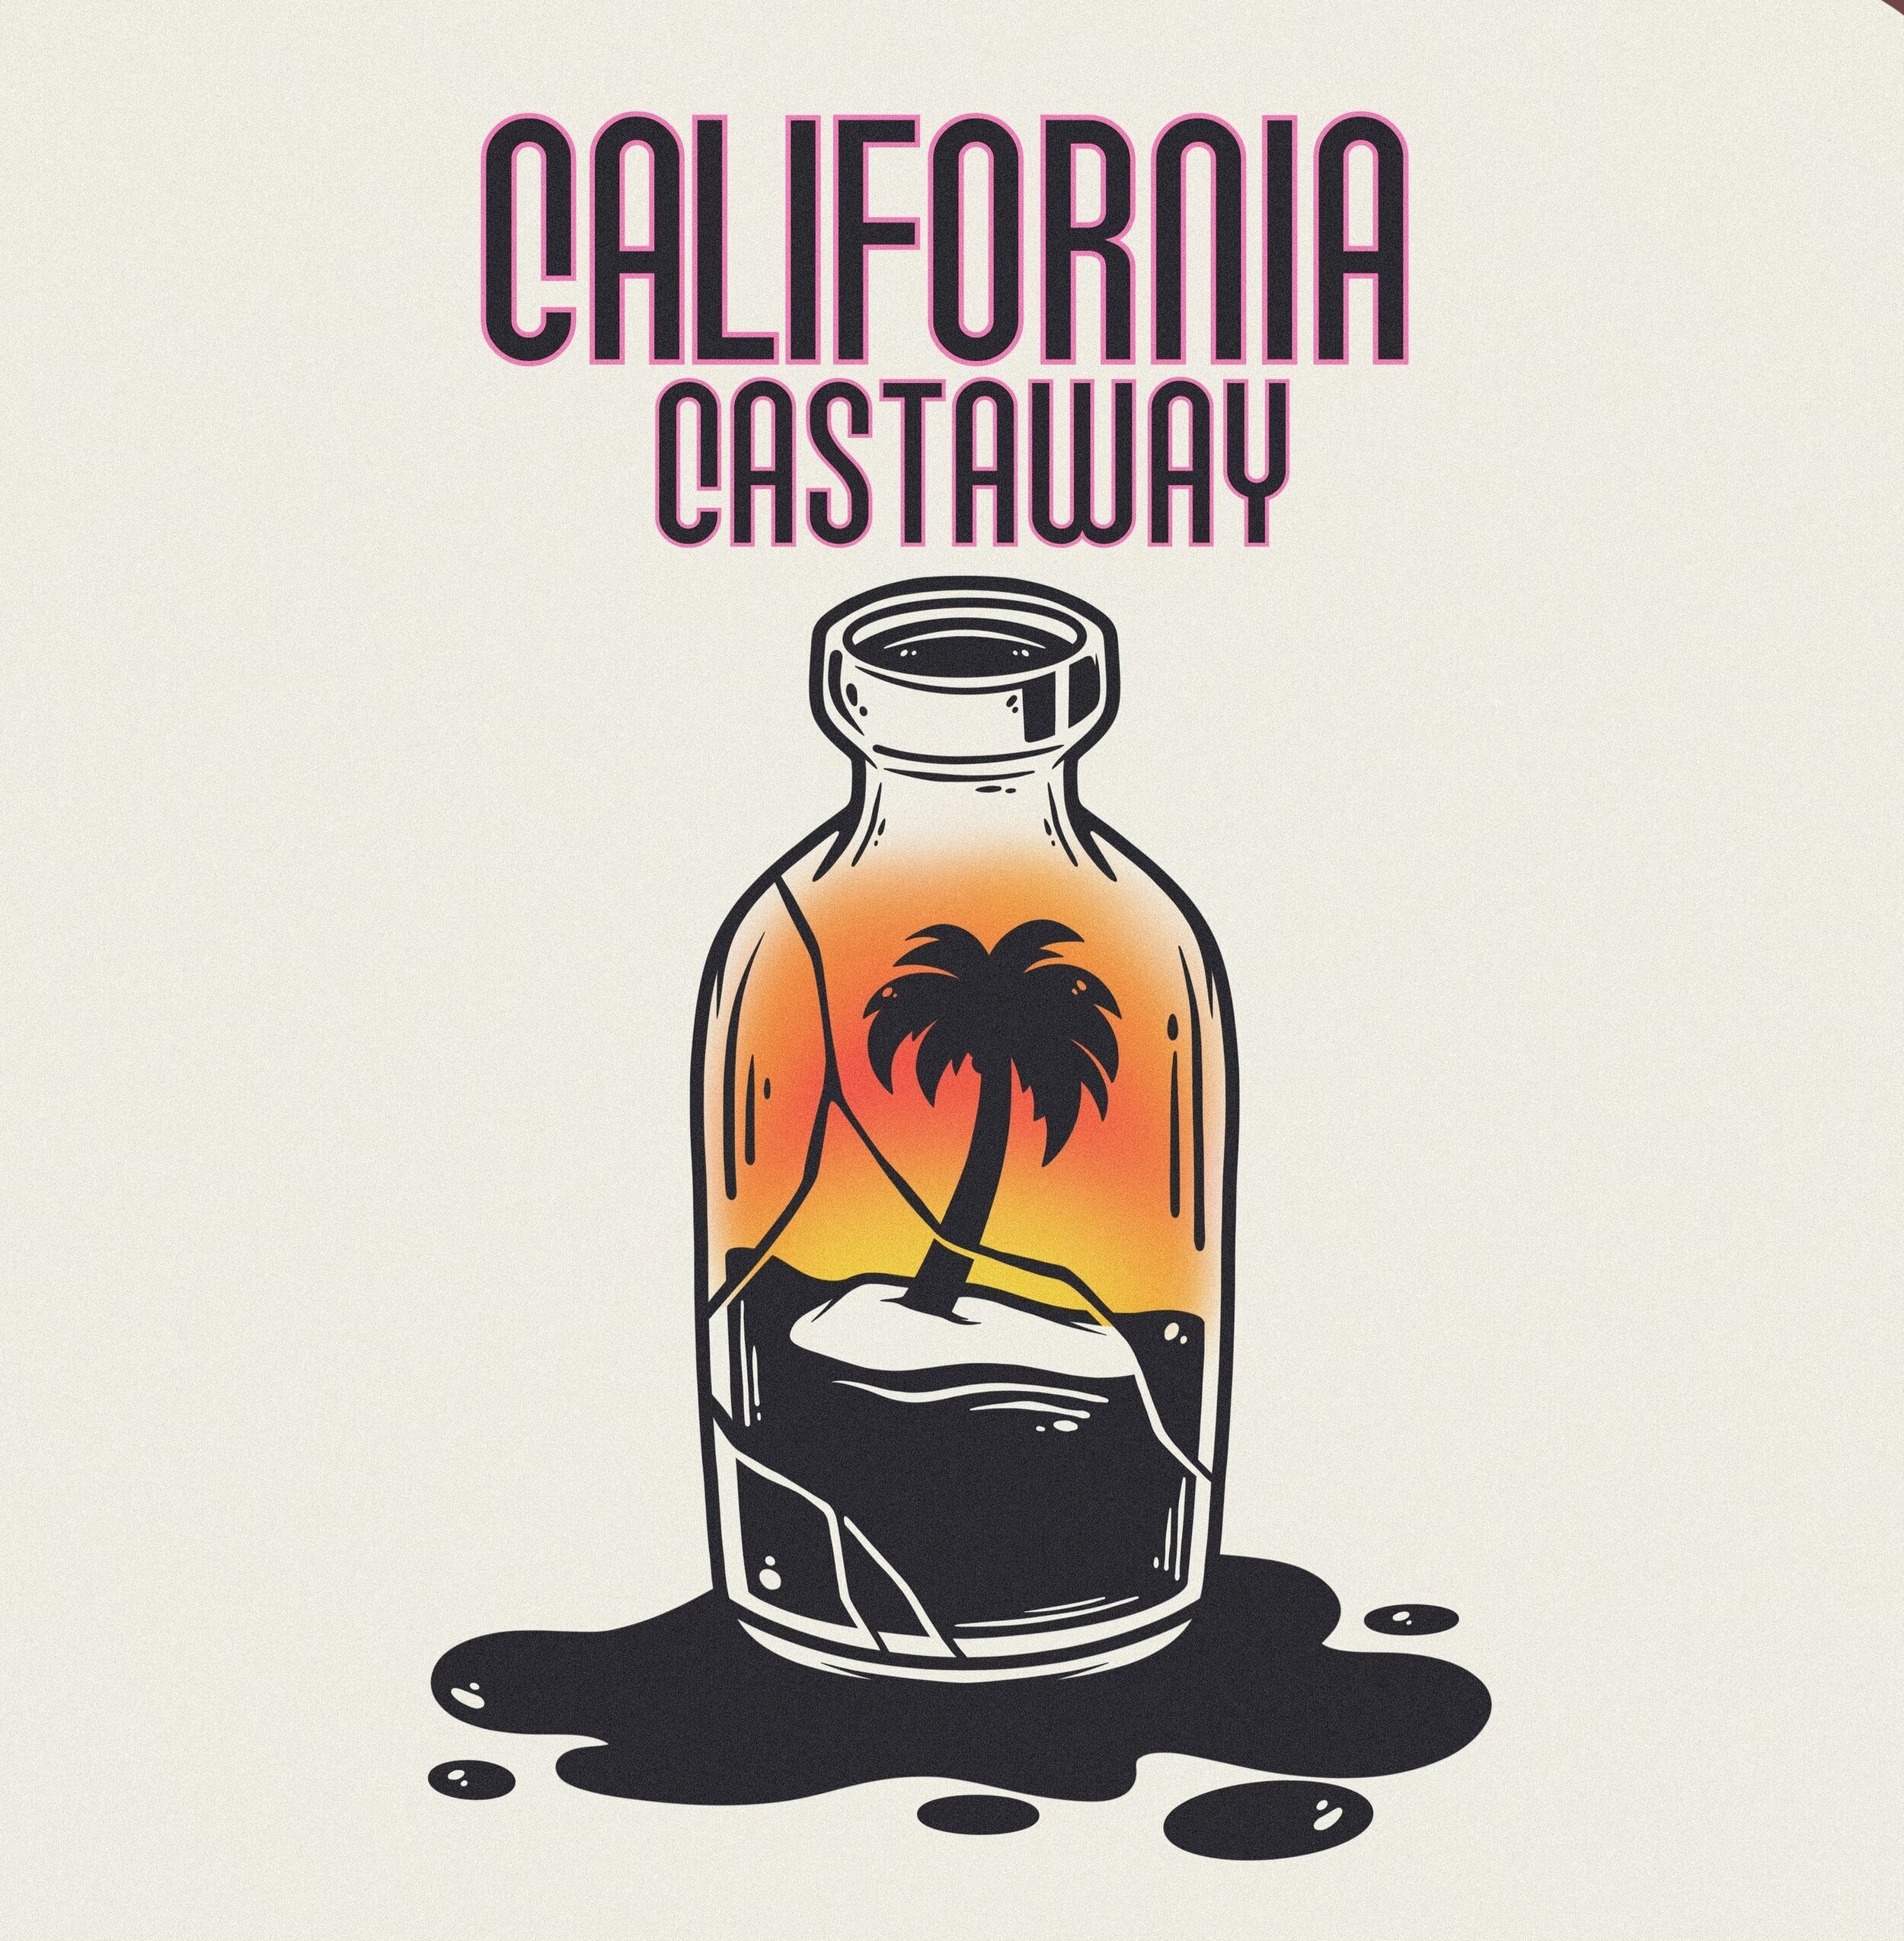 California Castaway